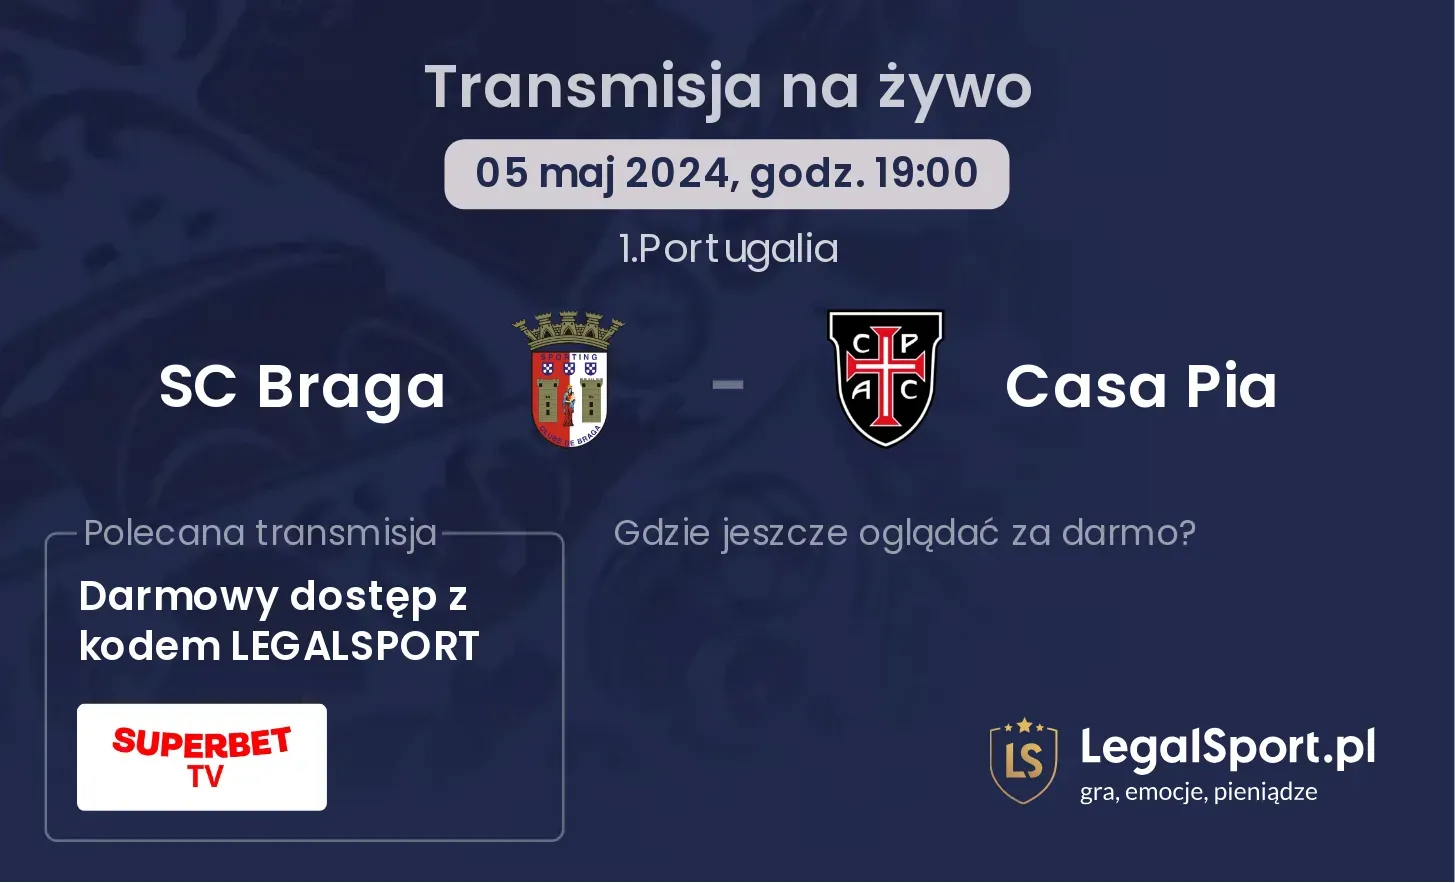 SC Braga - Casa Pia transmisja na żywo